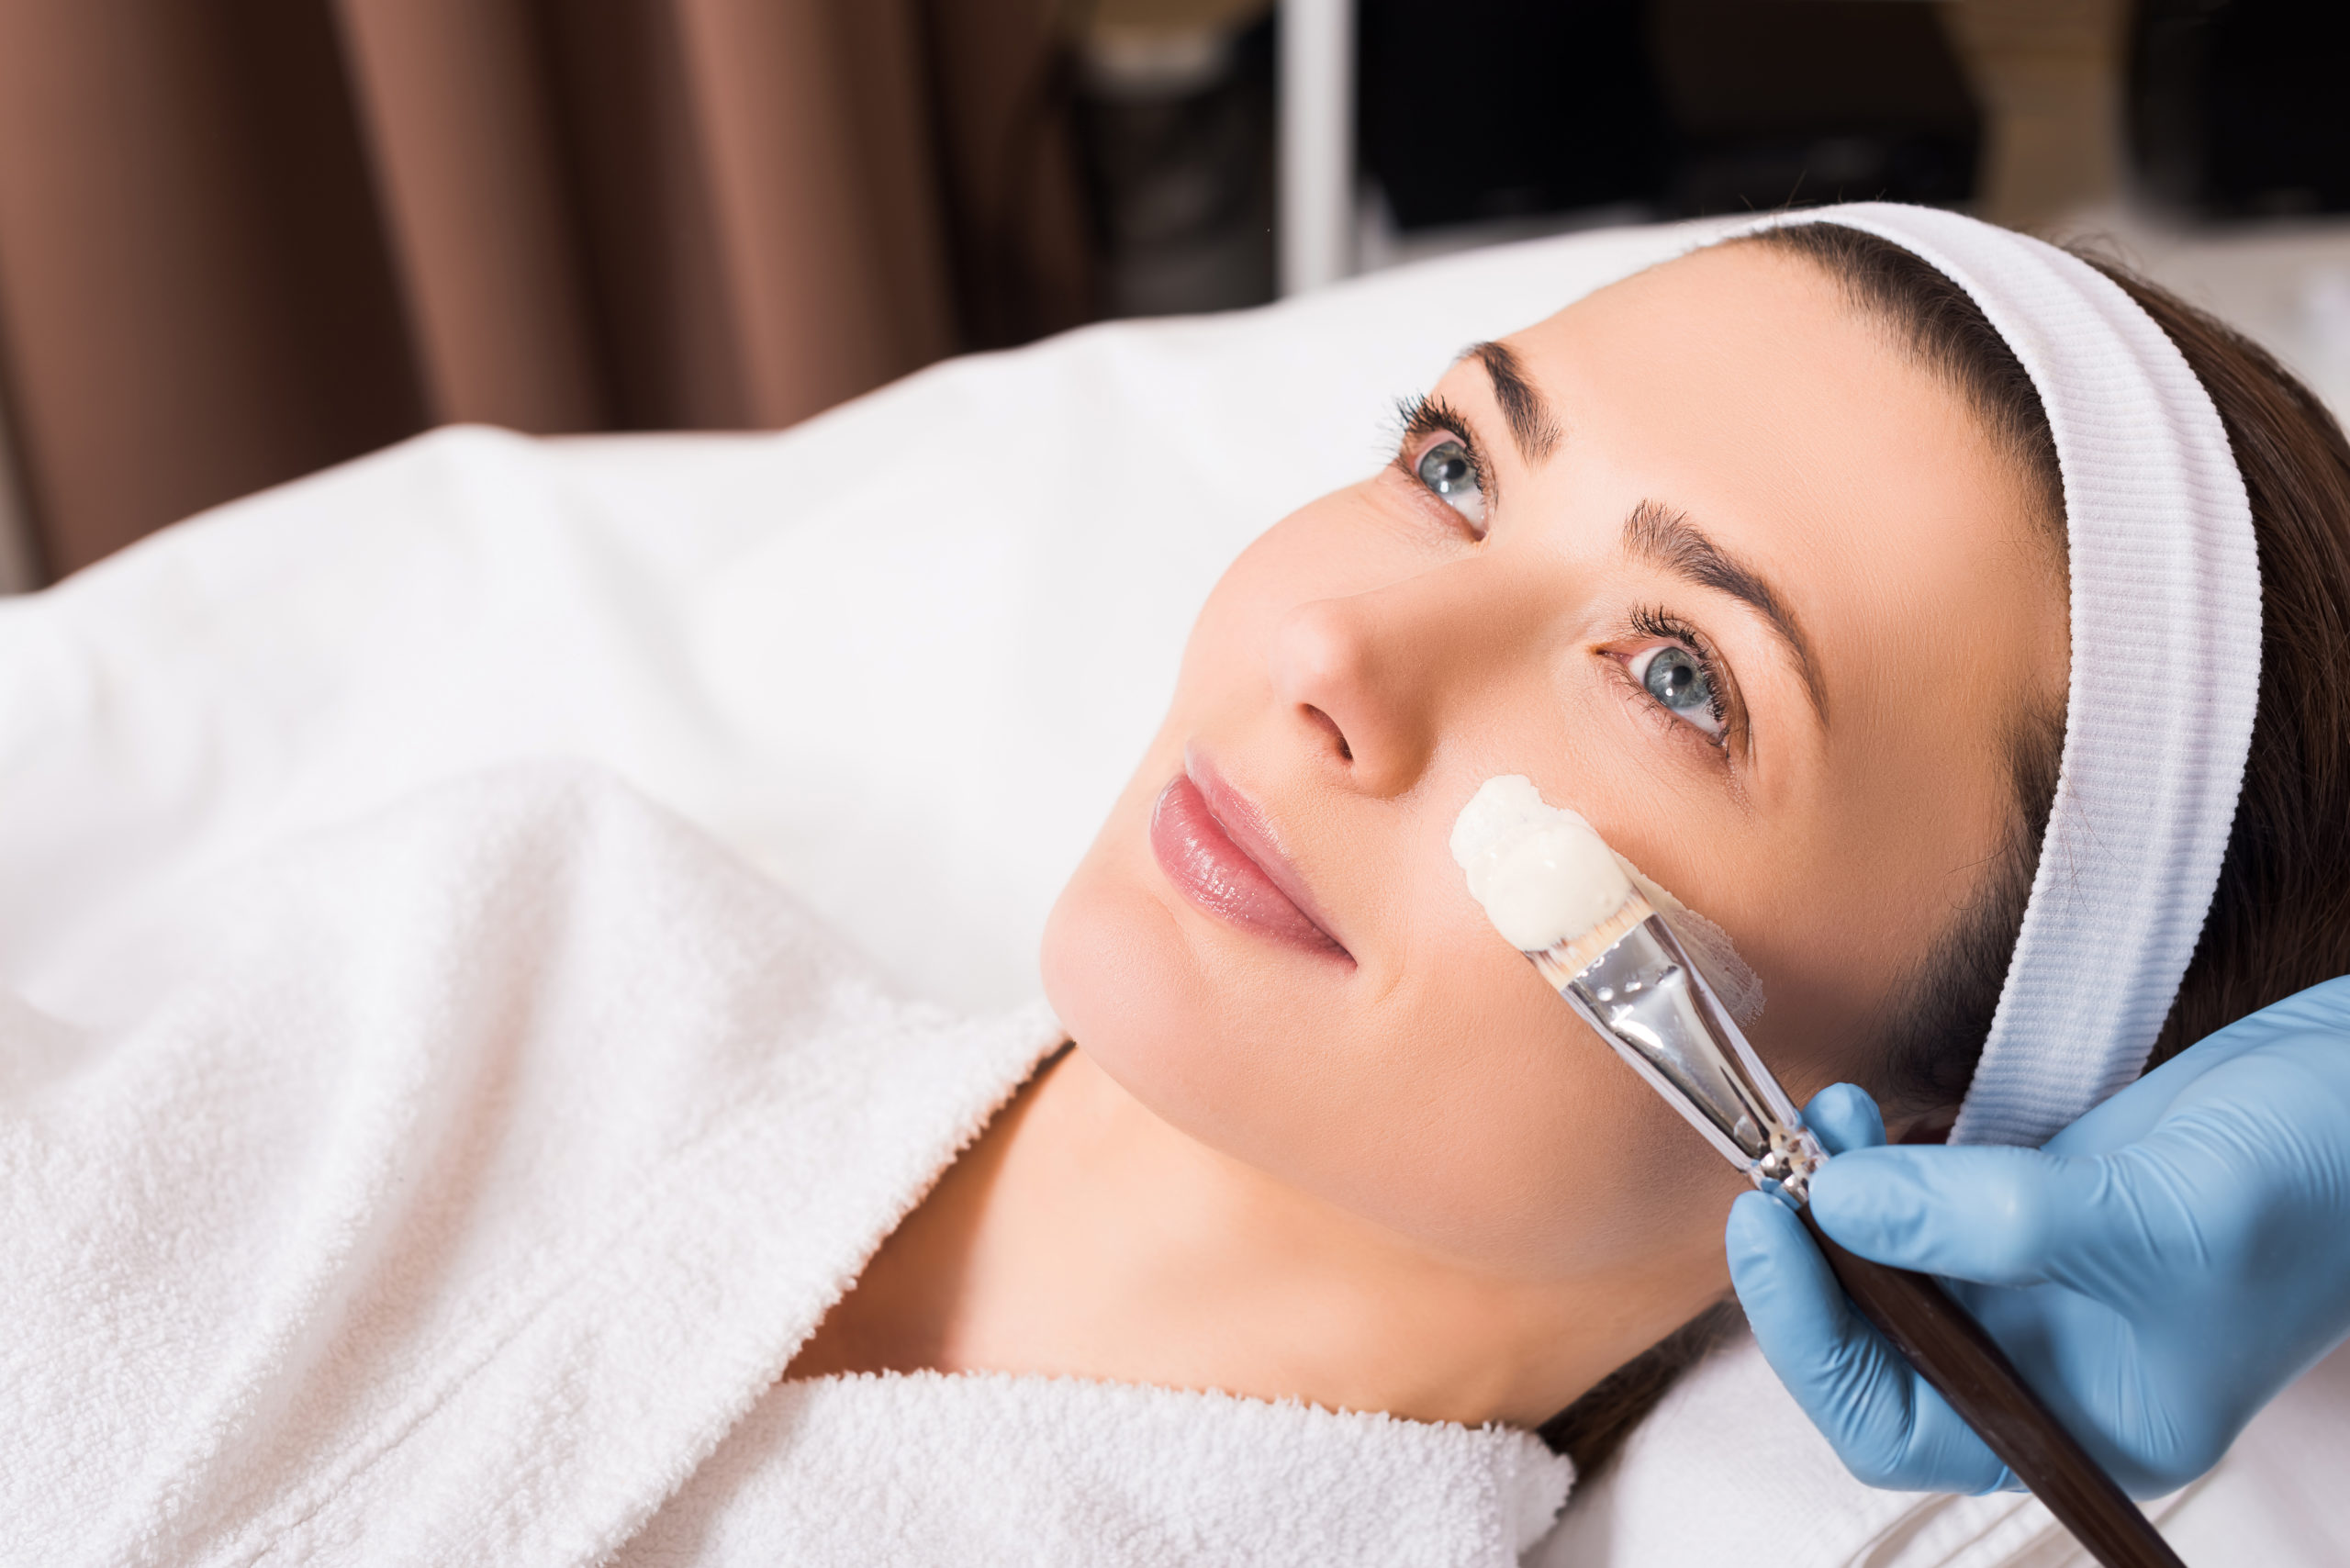 A woman undergoing a facial rejuvenation treatment